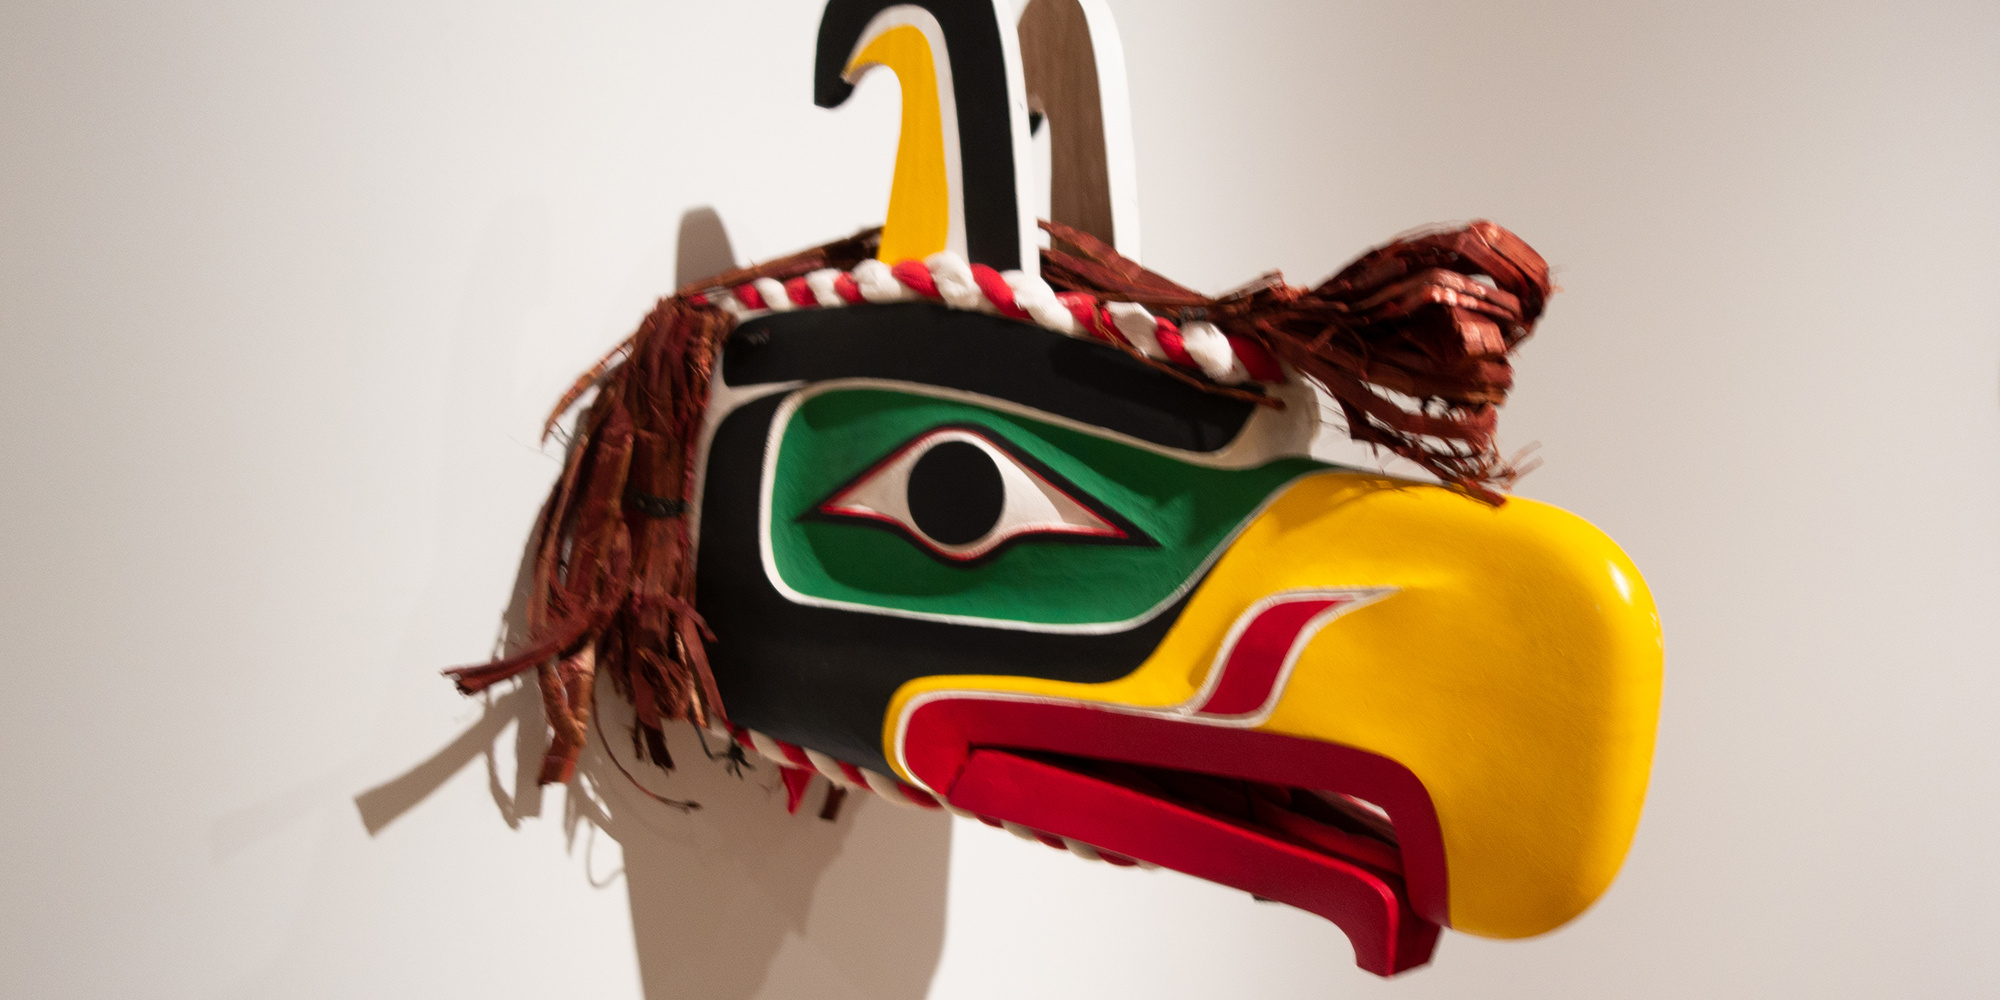 Thunderbird mask, Audain Museum, Whistler, British Columbia. Photo: Thomas Quine, Flickr.